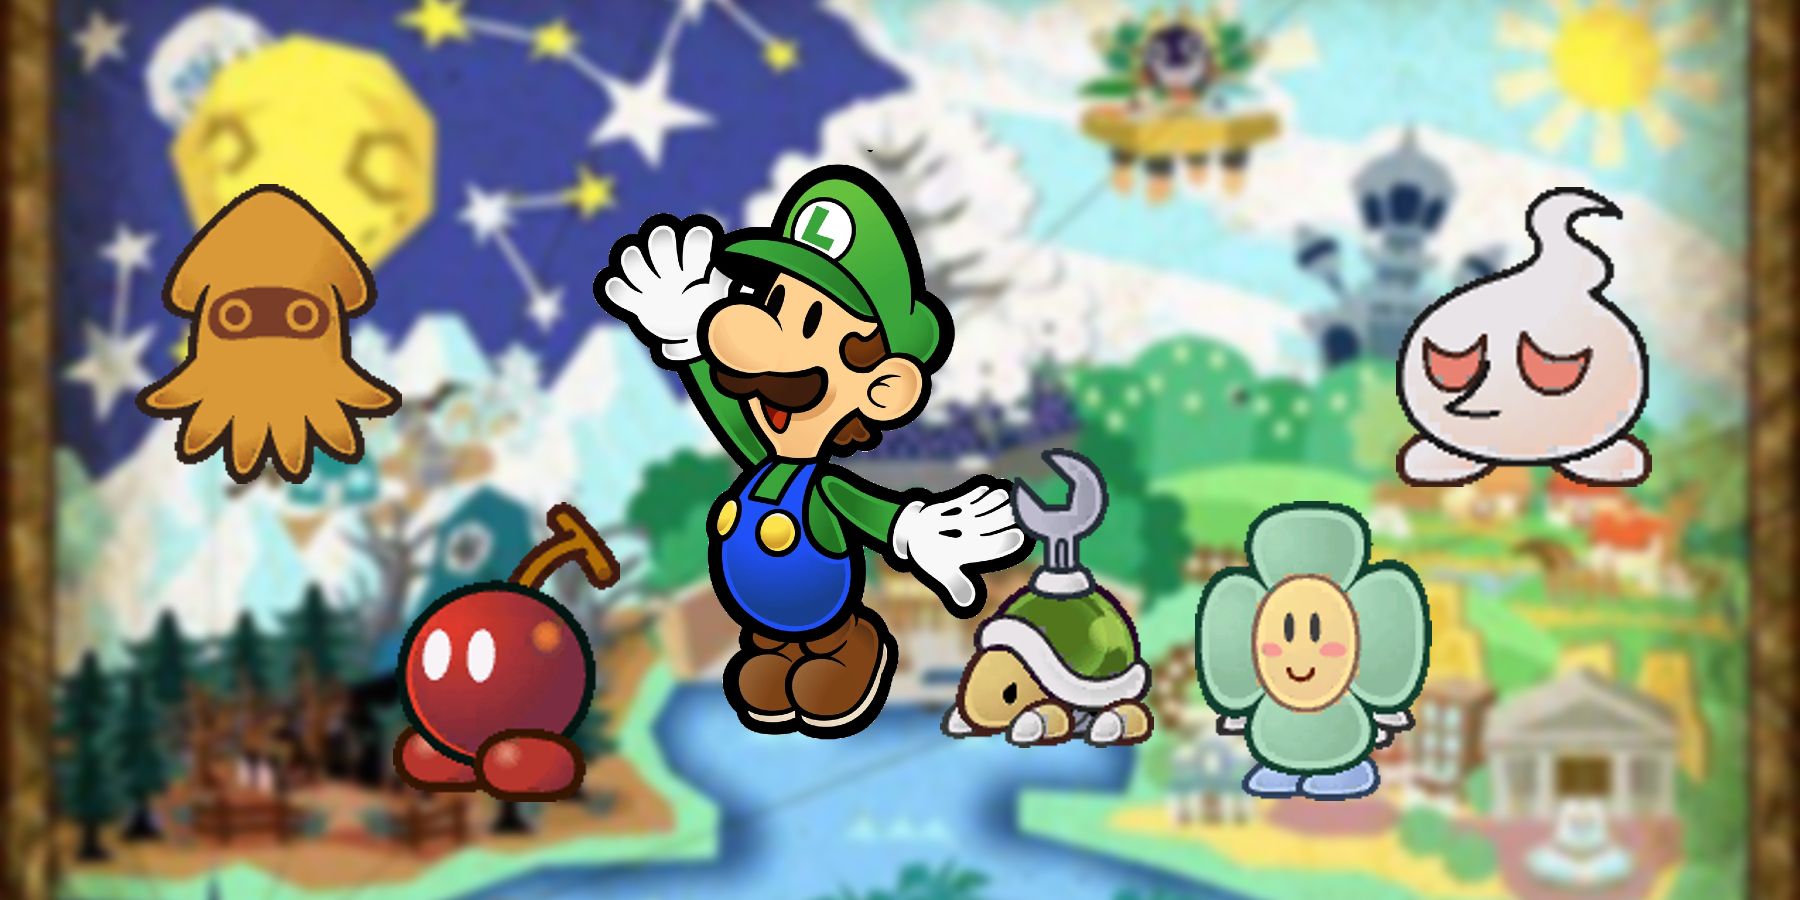 Paper Mario Should Finally Give The ThousandYear Doors Luigi His Due